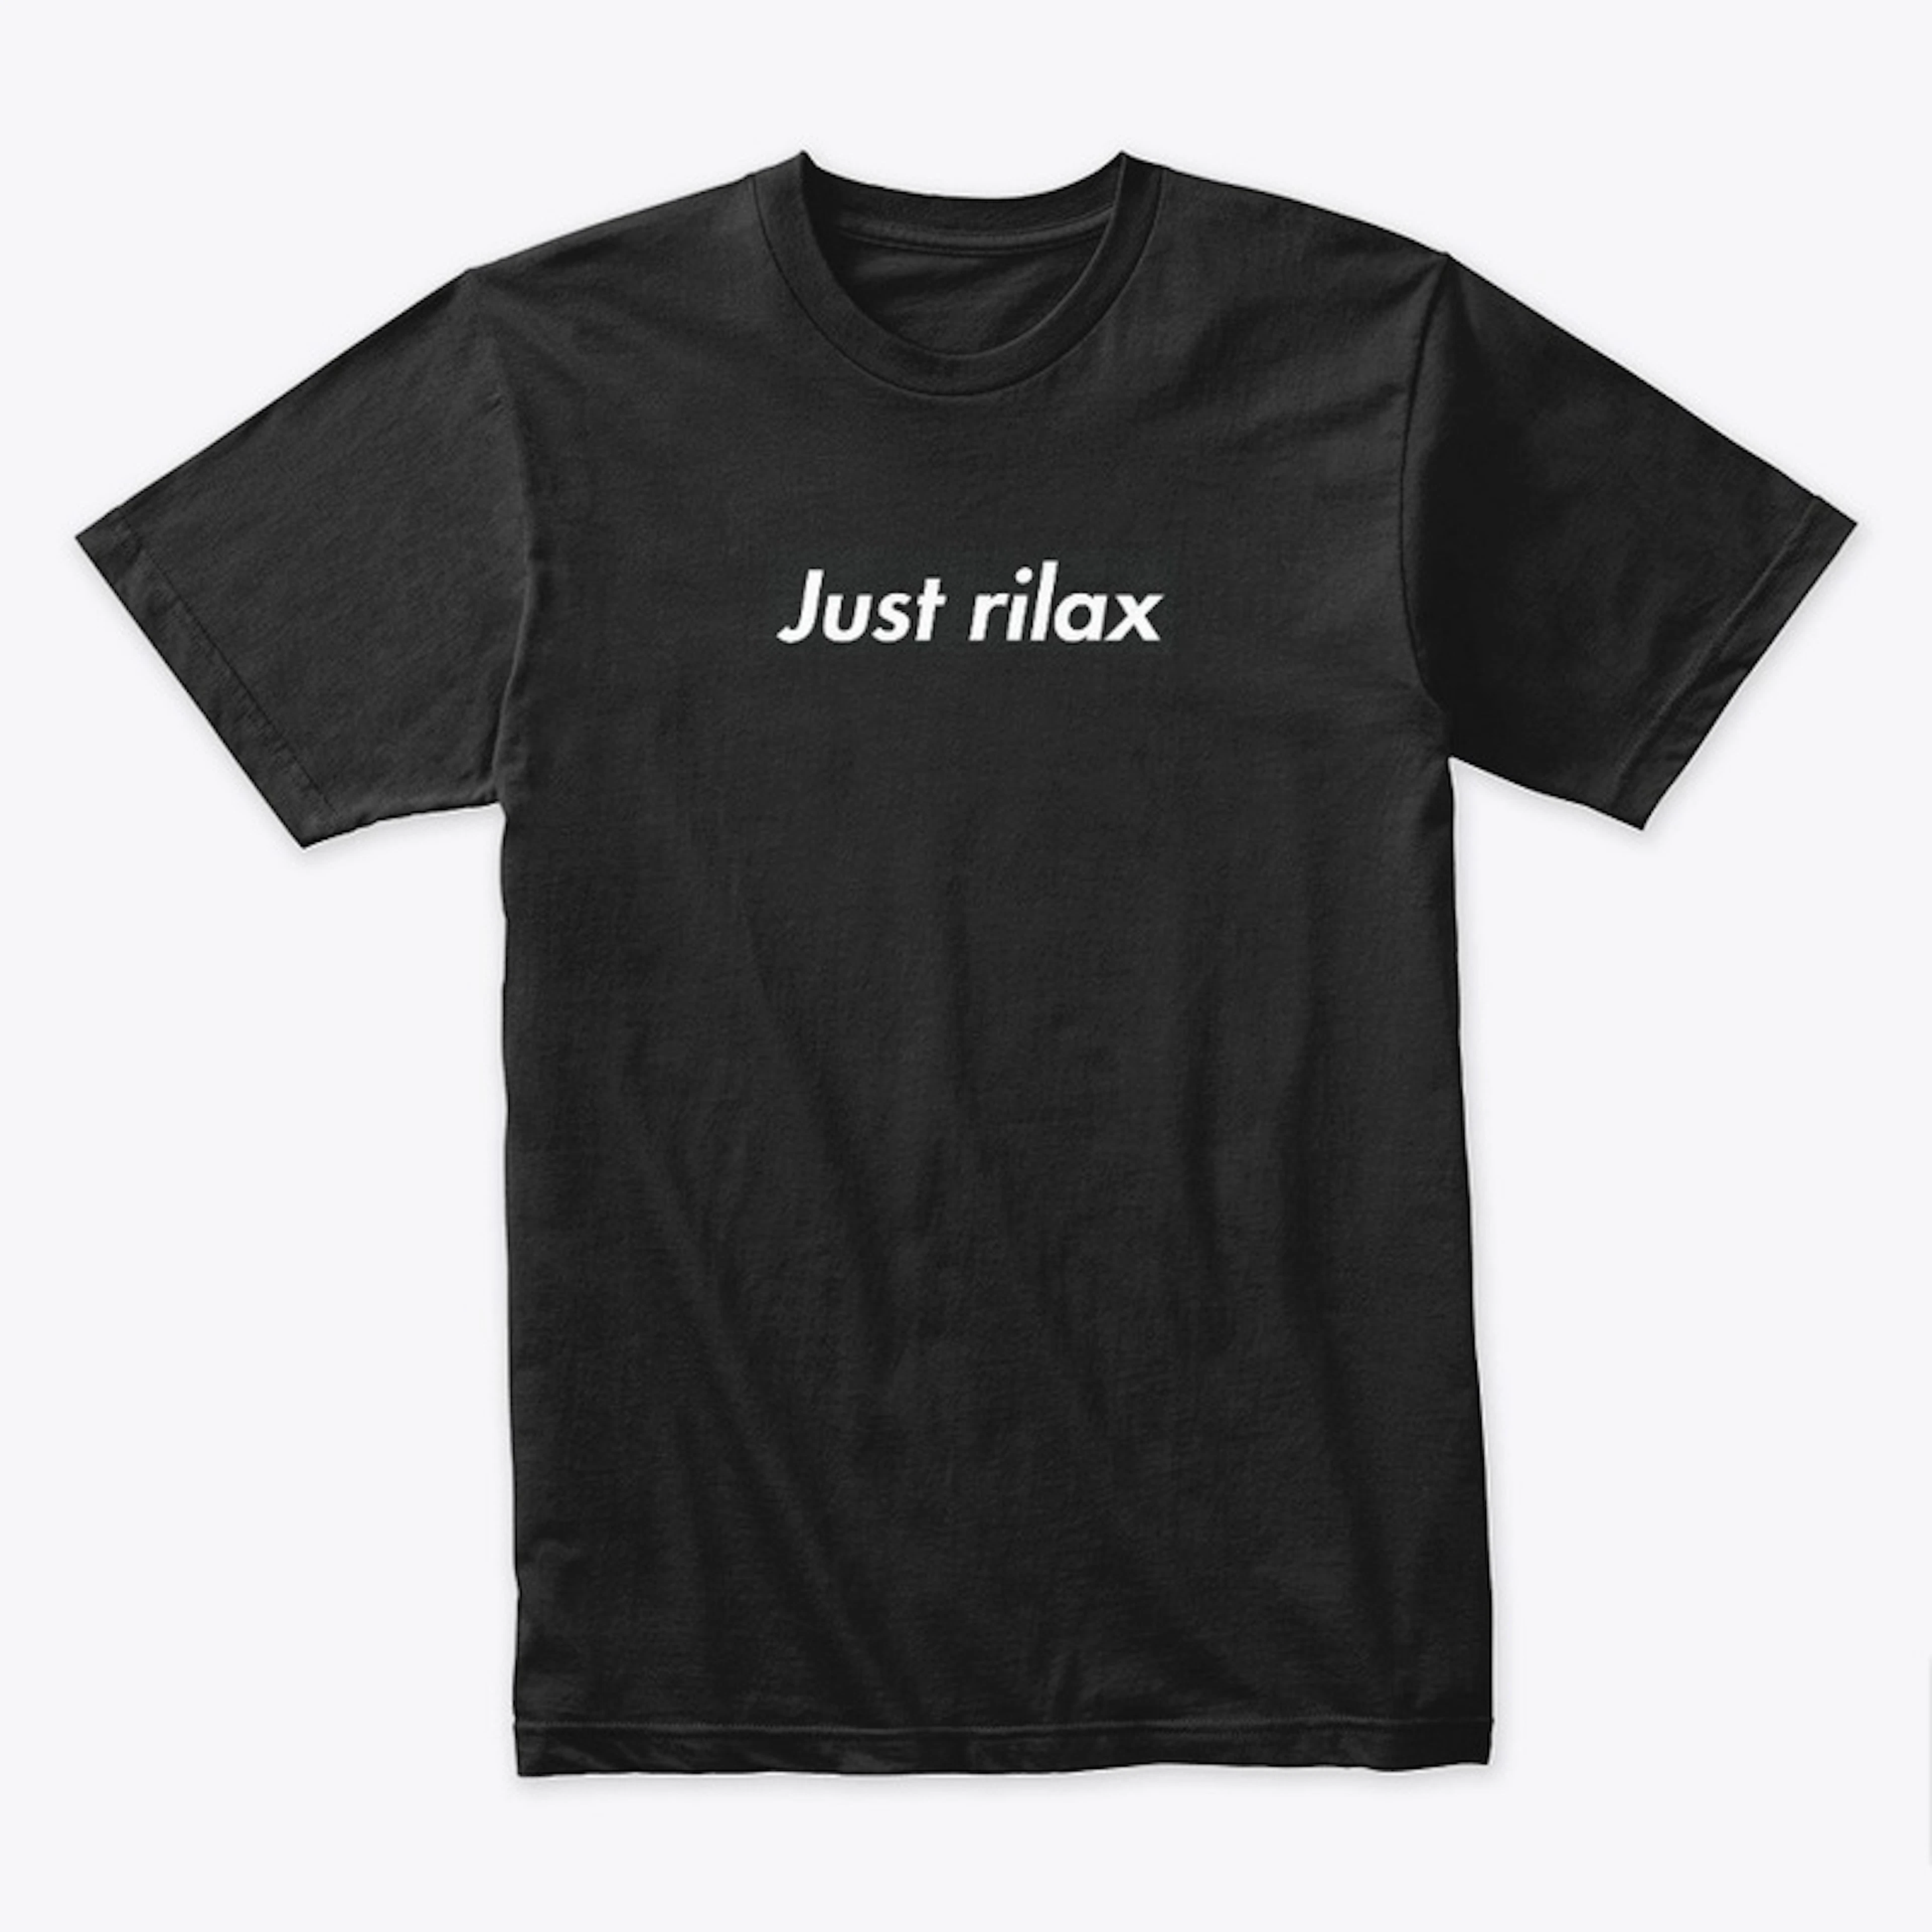 Just rilax "LOGO" T-shirt